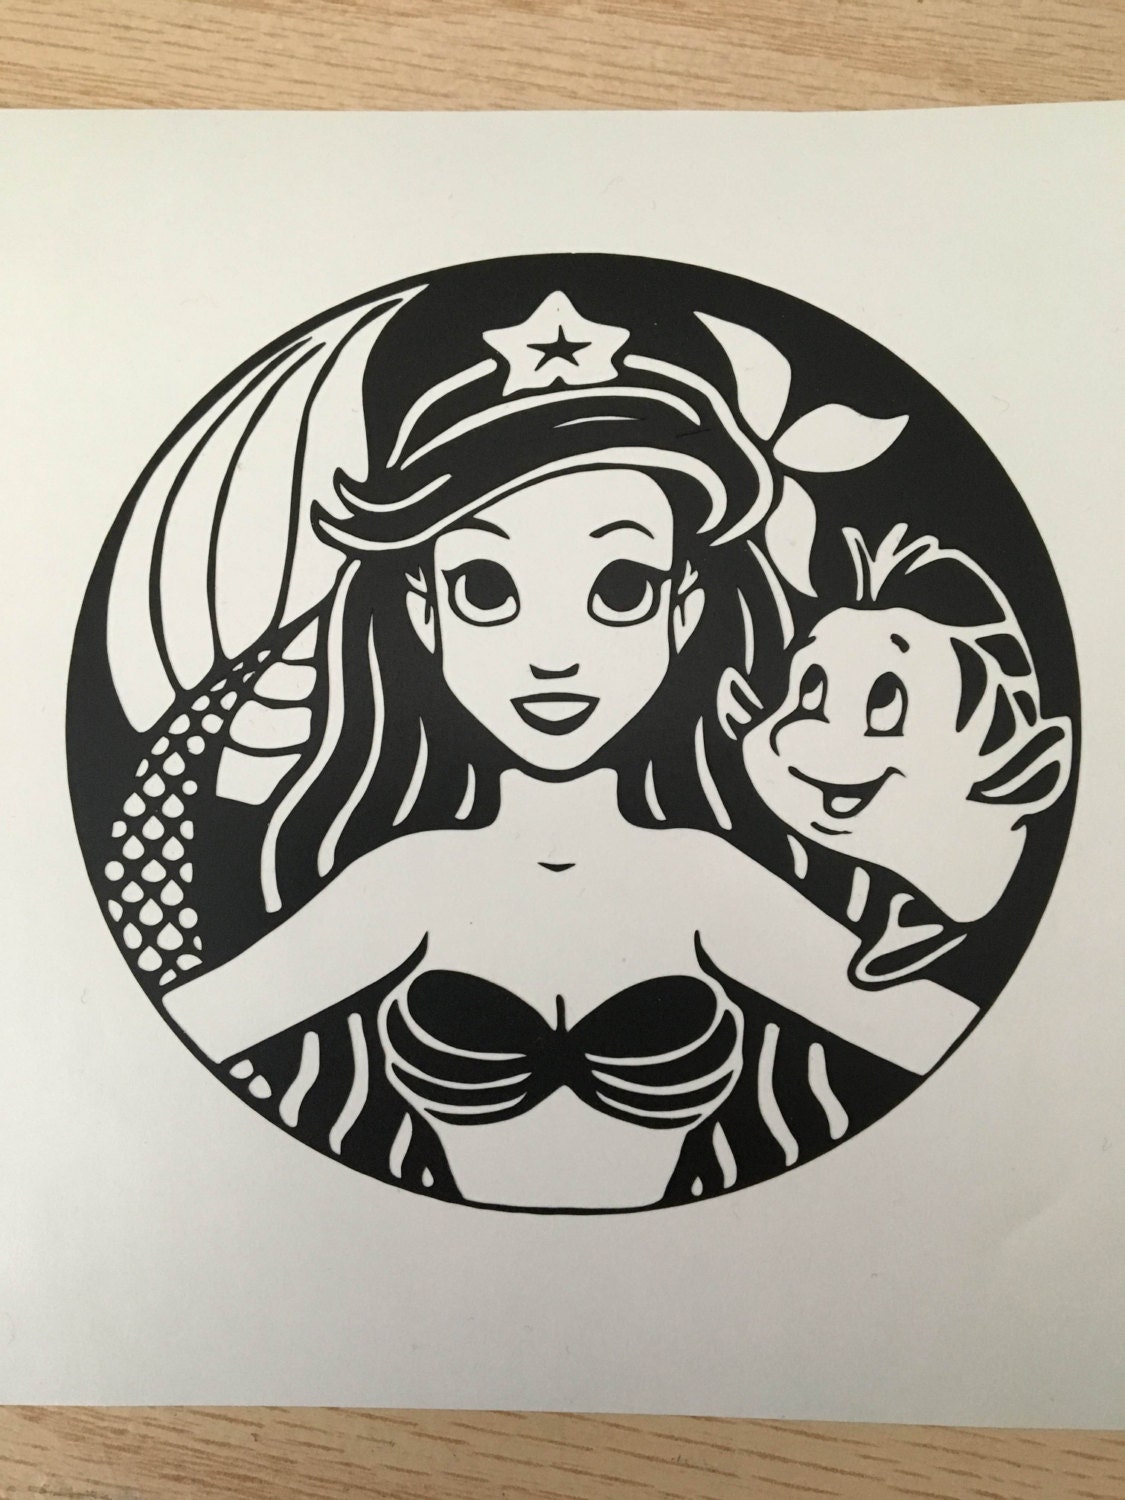 Download The Little Mermaid Starbucks Crossover Vinyl Decal